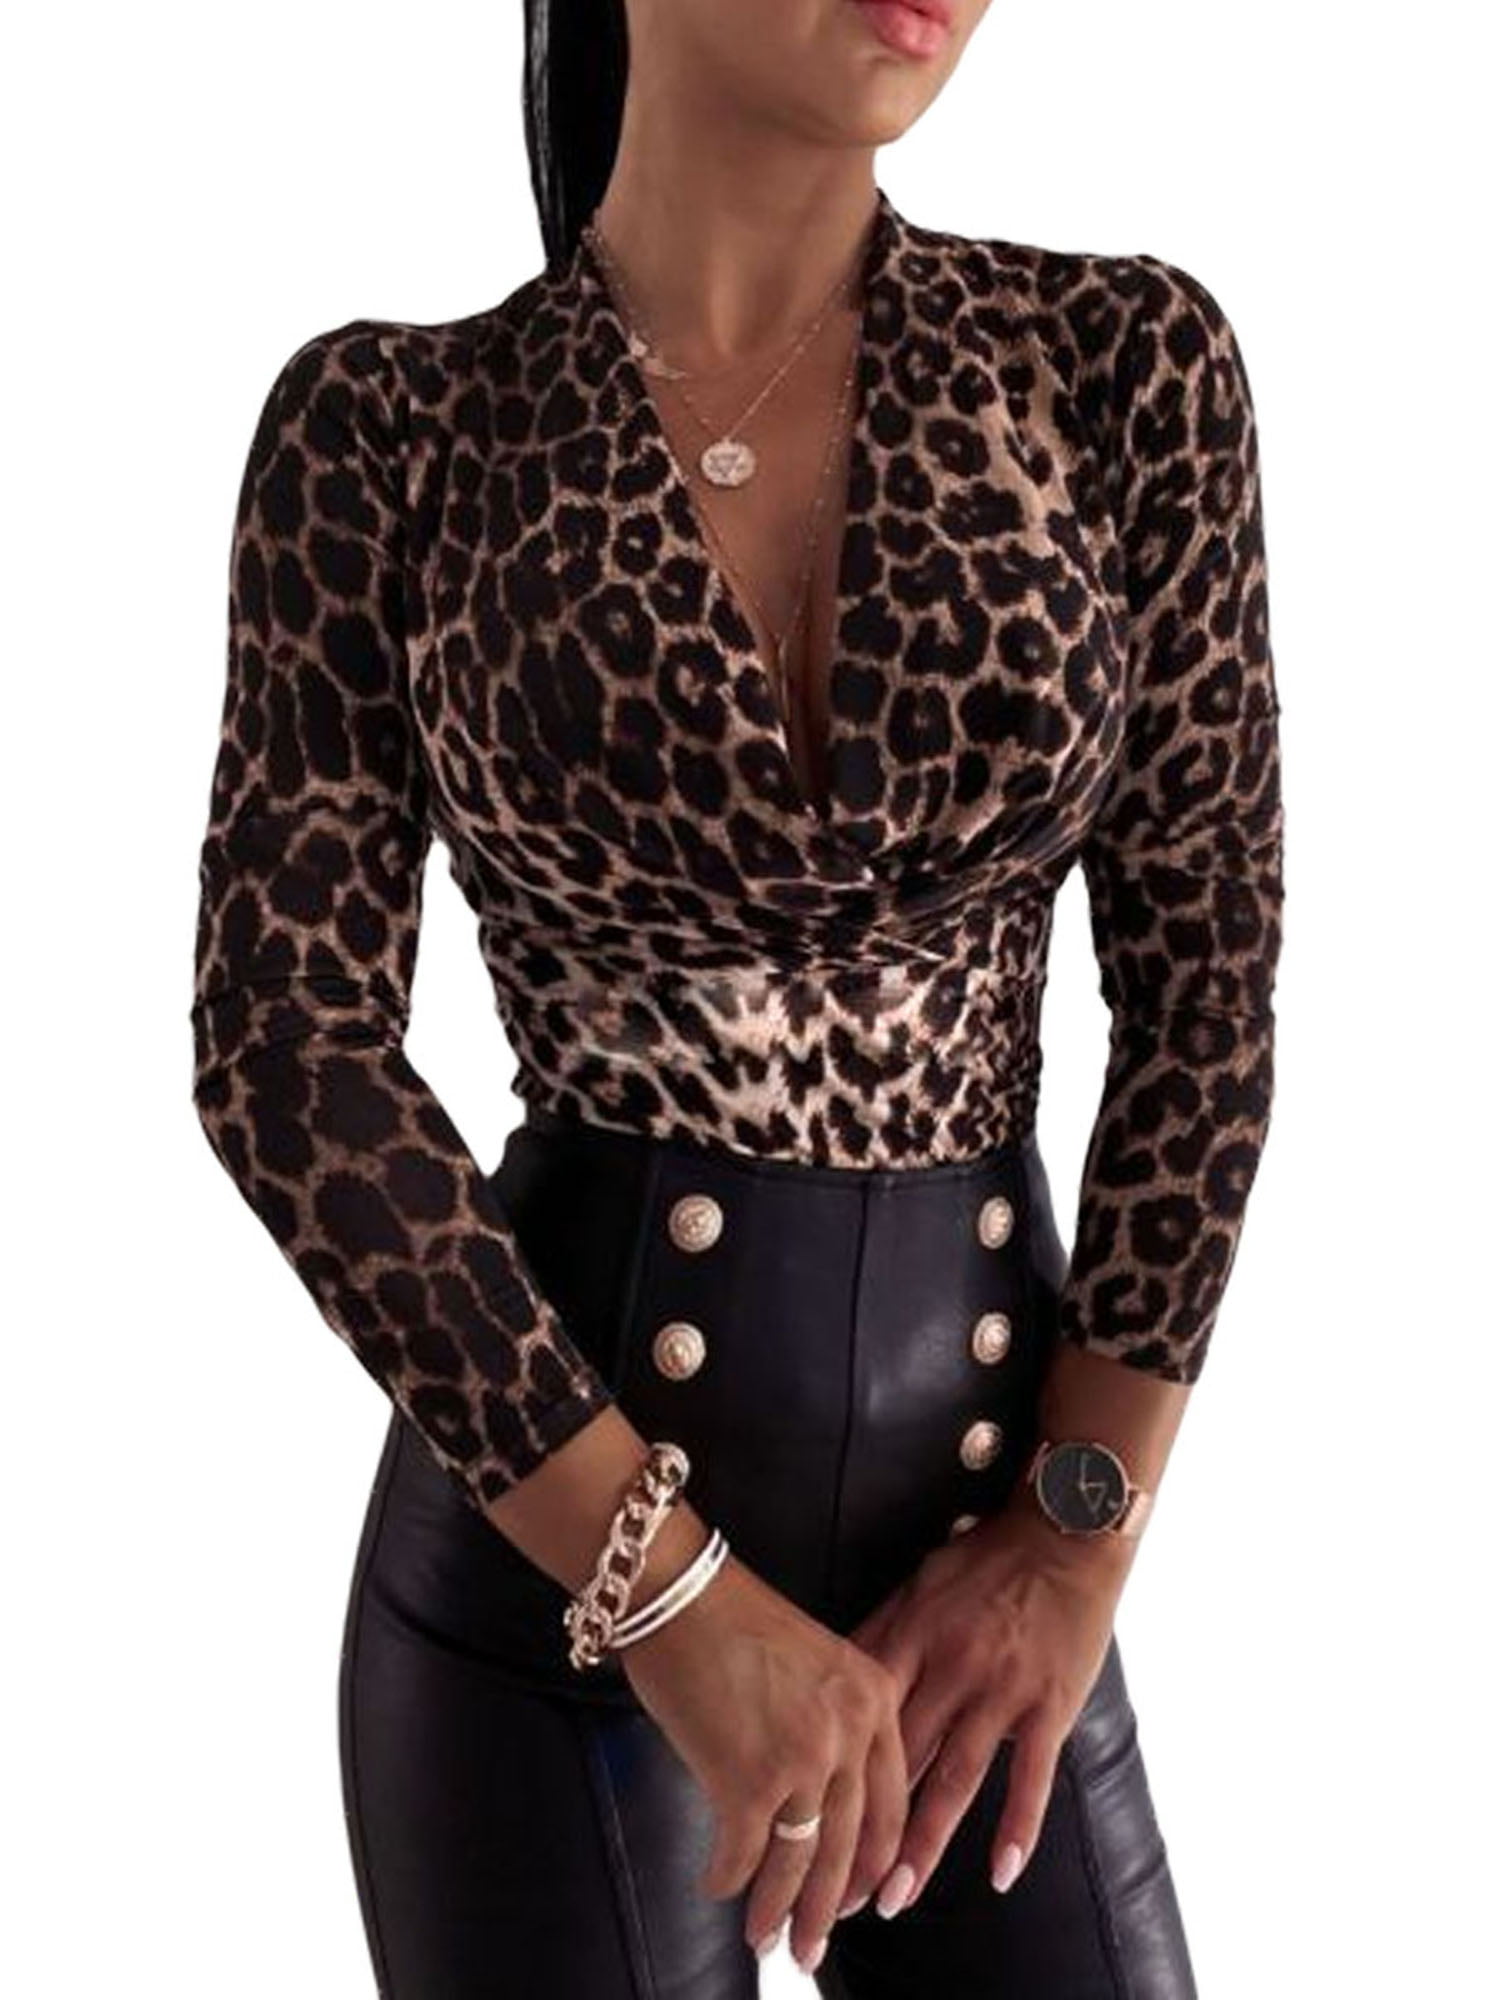 Damen Slim Bodysuit Leopard Snake Print Jumpsuit V Neck Romper Casual Trikot